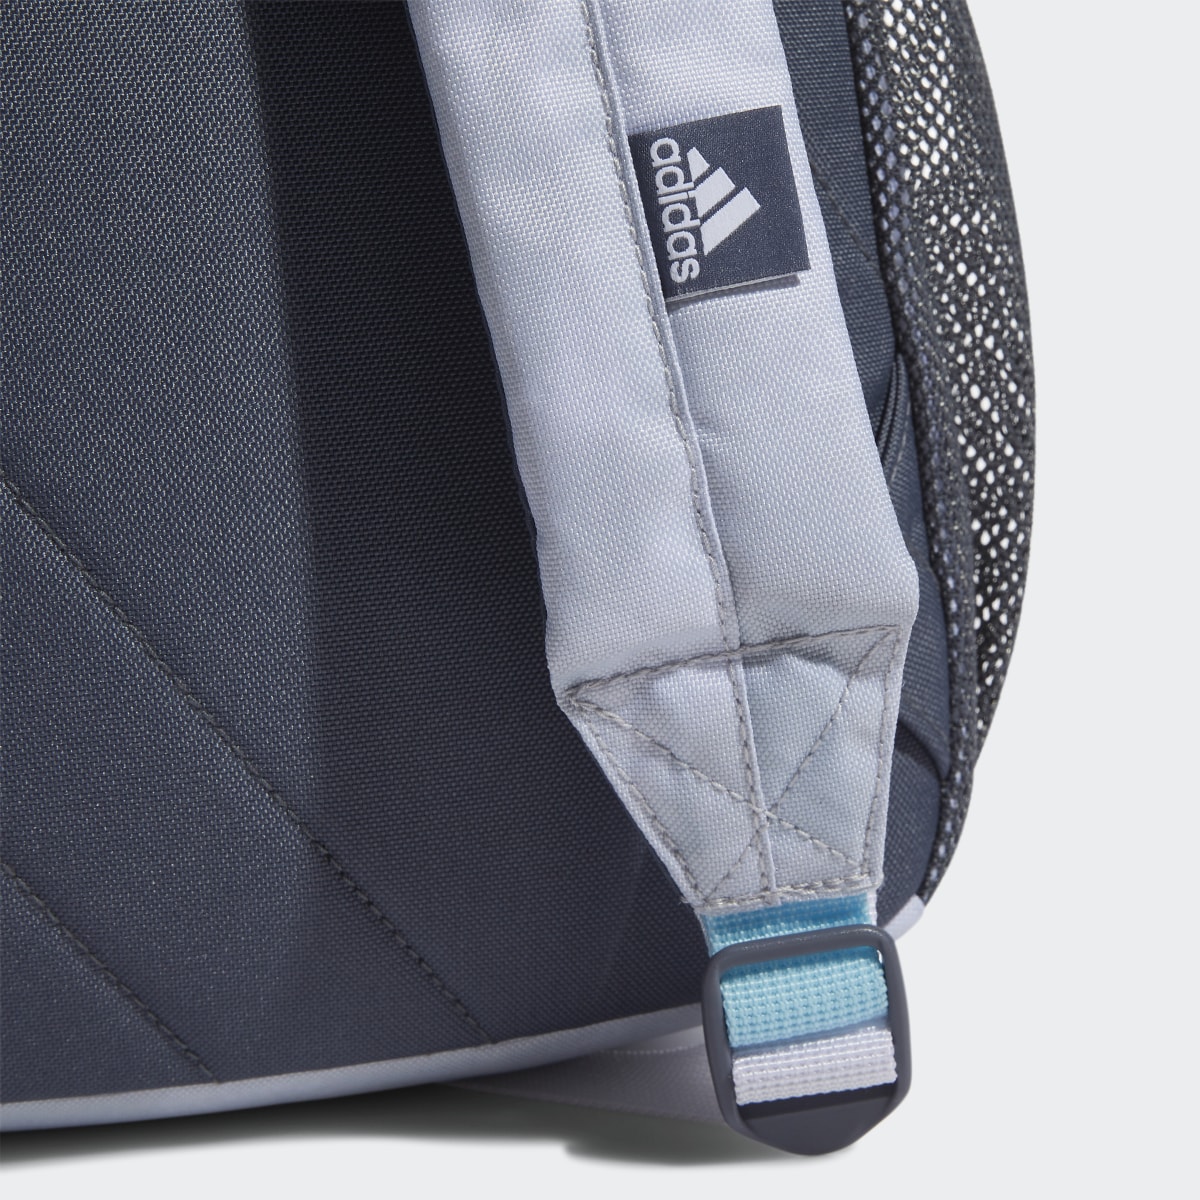 Adidas Ready Backpack. 7